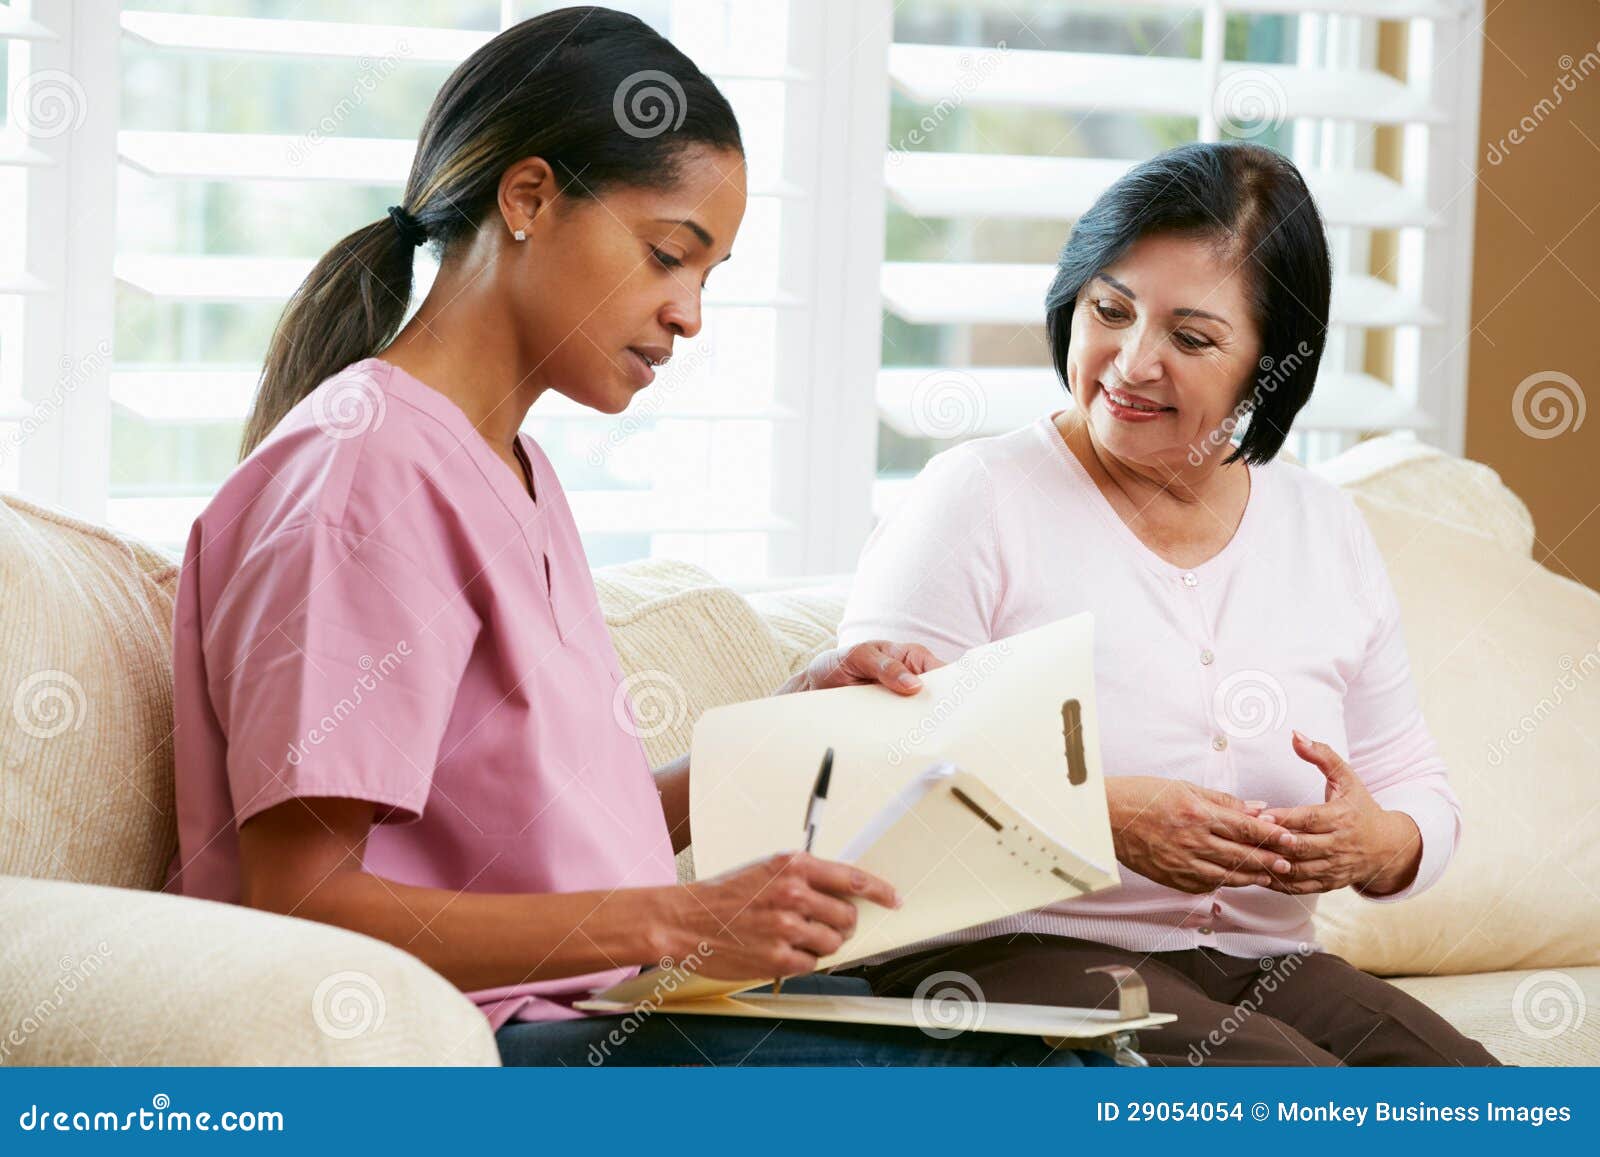 nurse discussing records with senior female patient